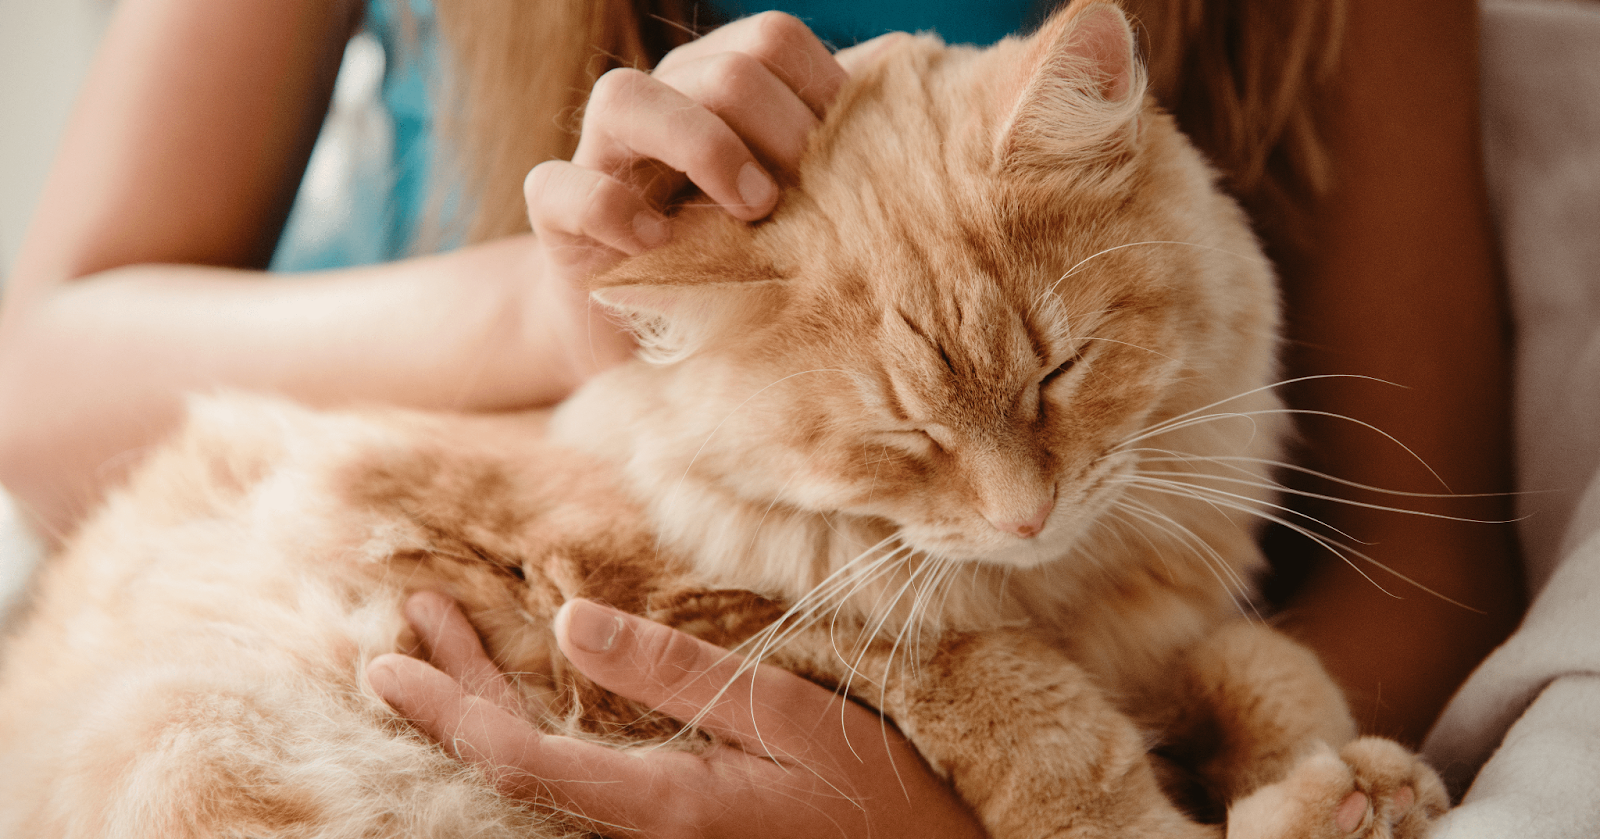 ginger cat enjoying a head rub from woman